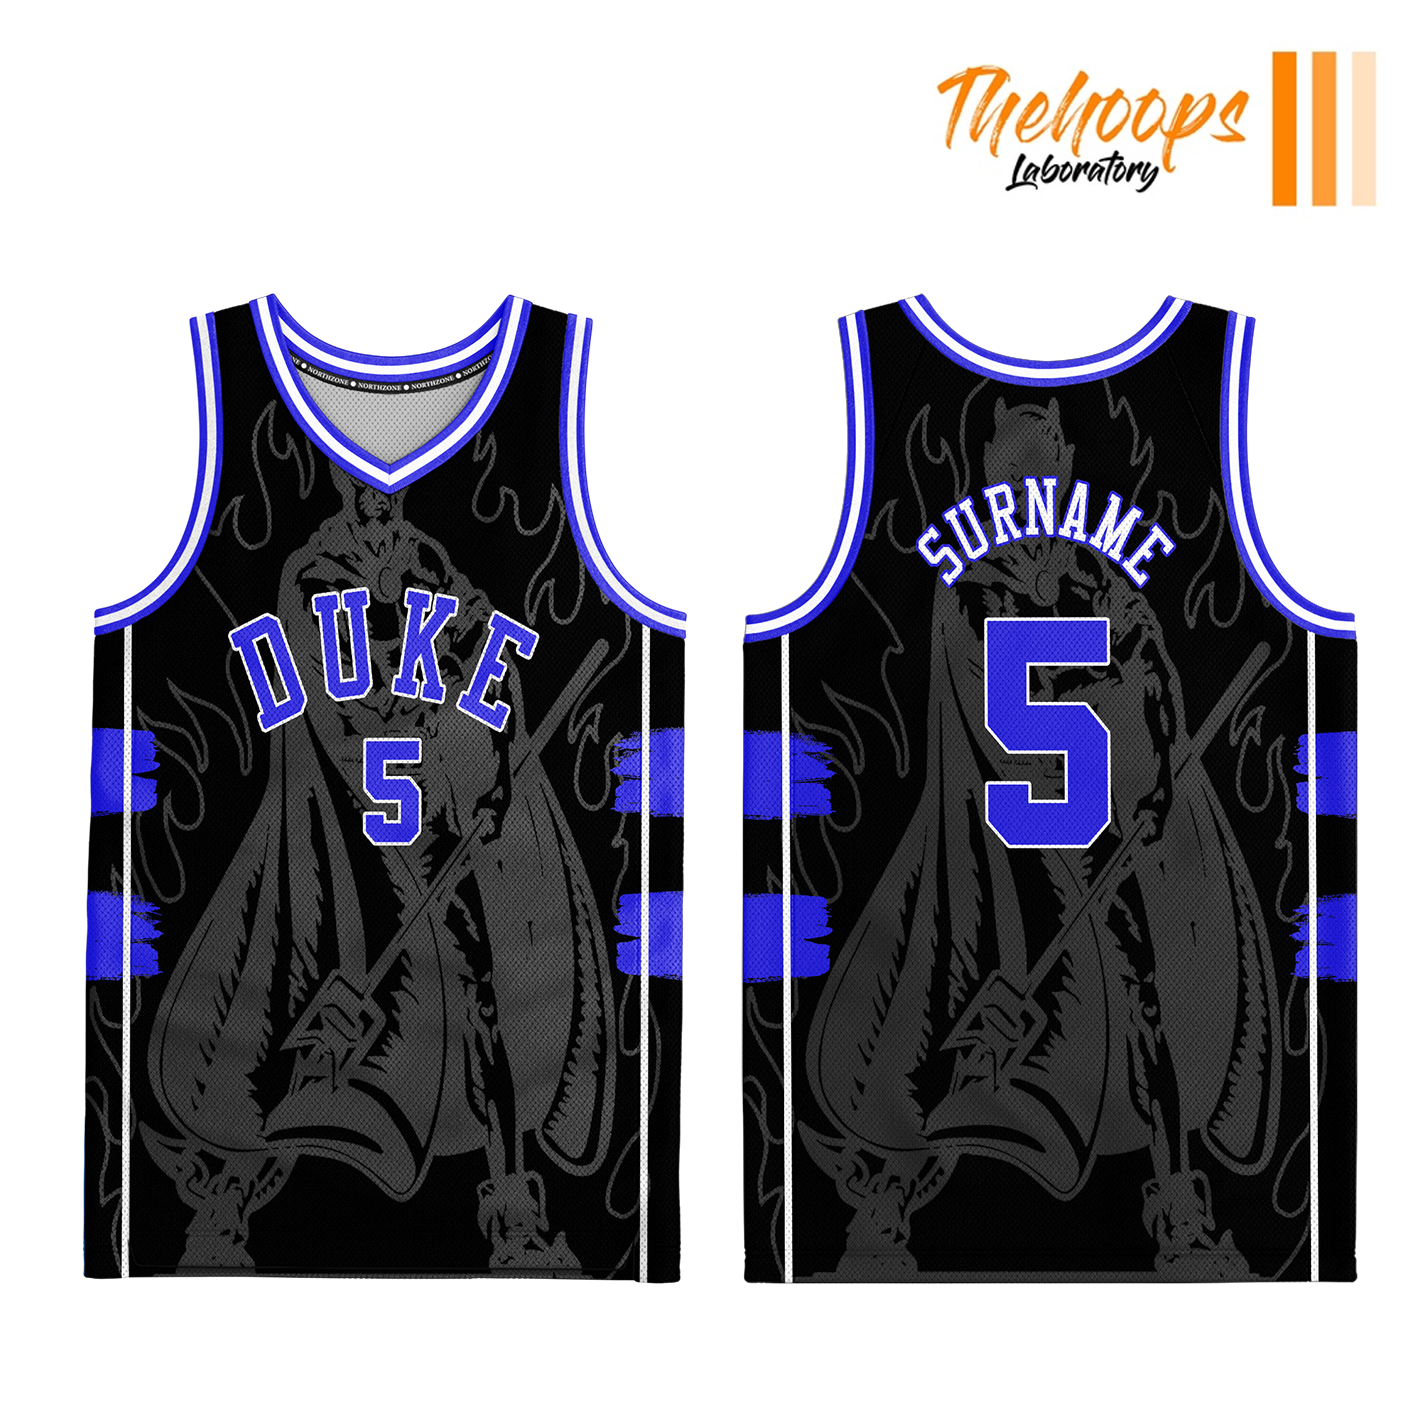 New Duke Basketball The Brotherhood Uniform — UNISWAG